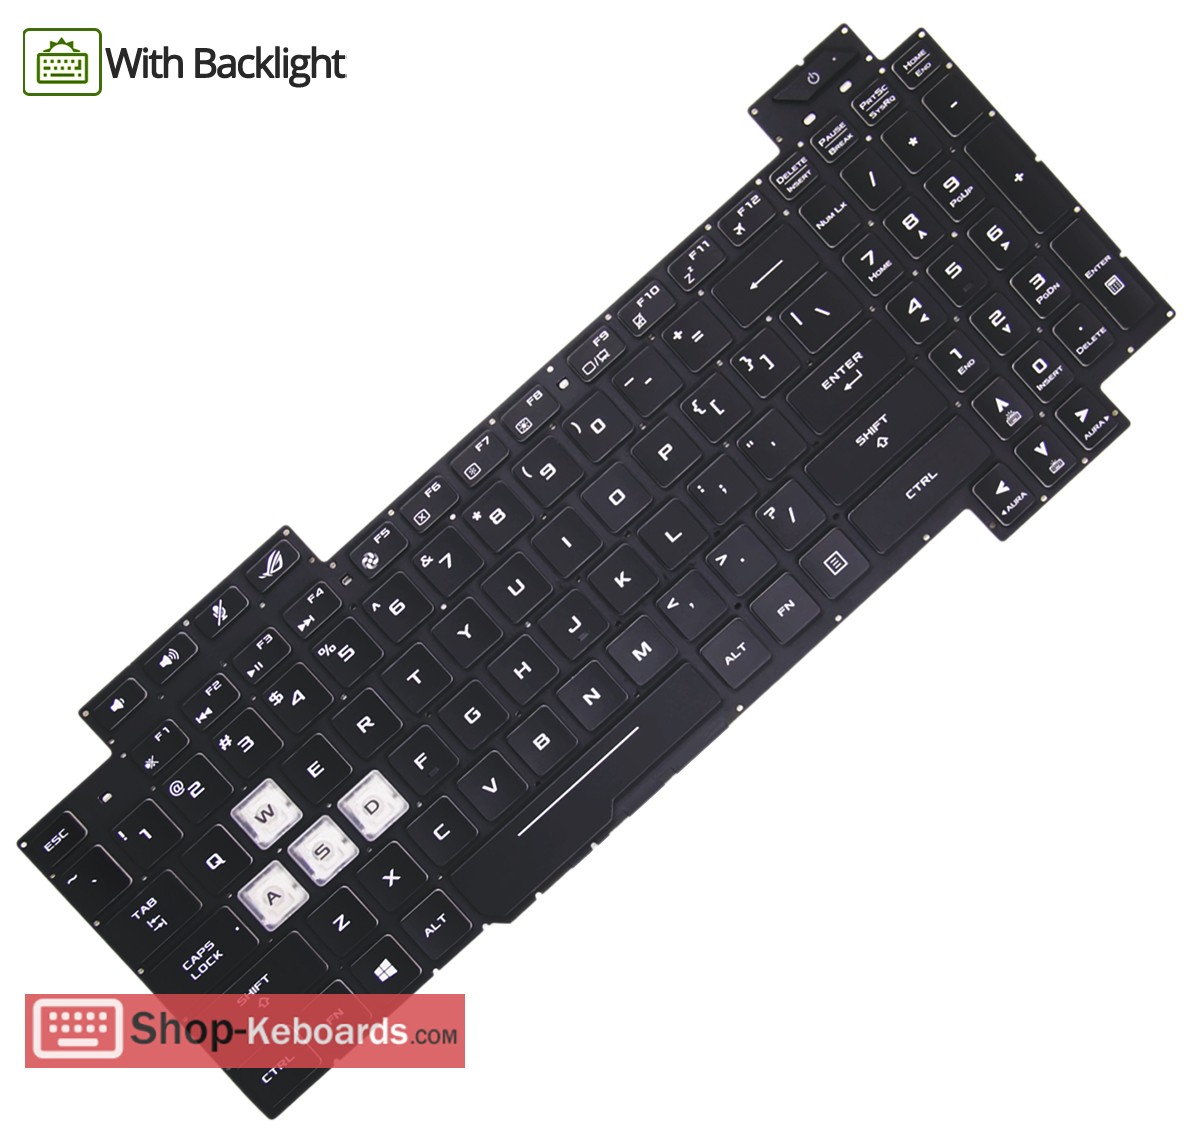 Asus 0KNR0-661GUS00 Keyboard replacement